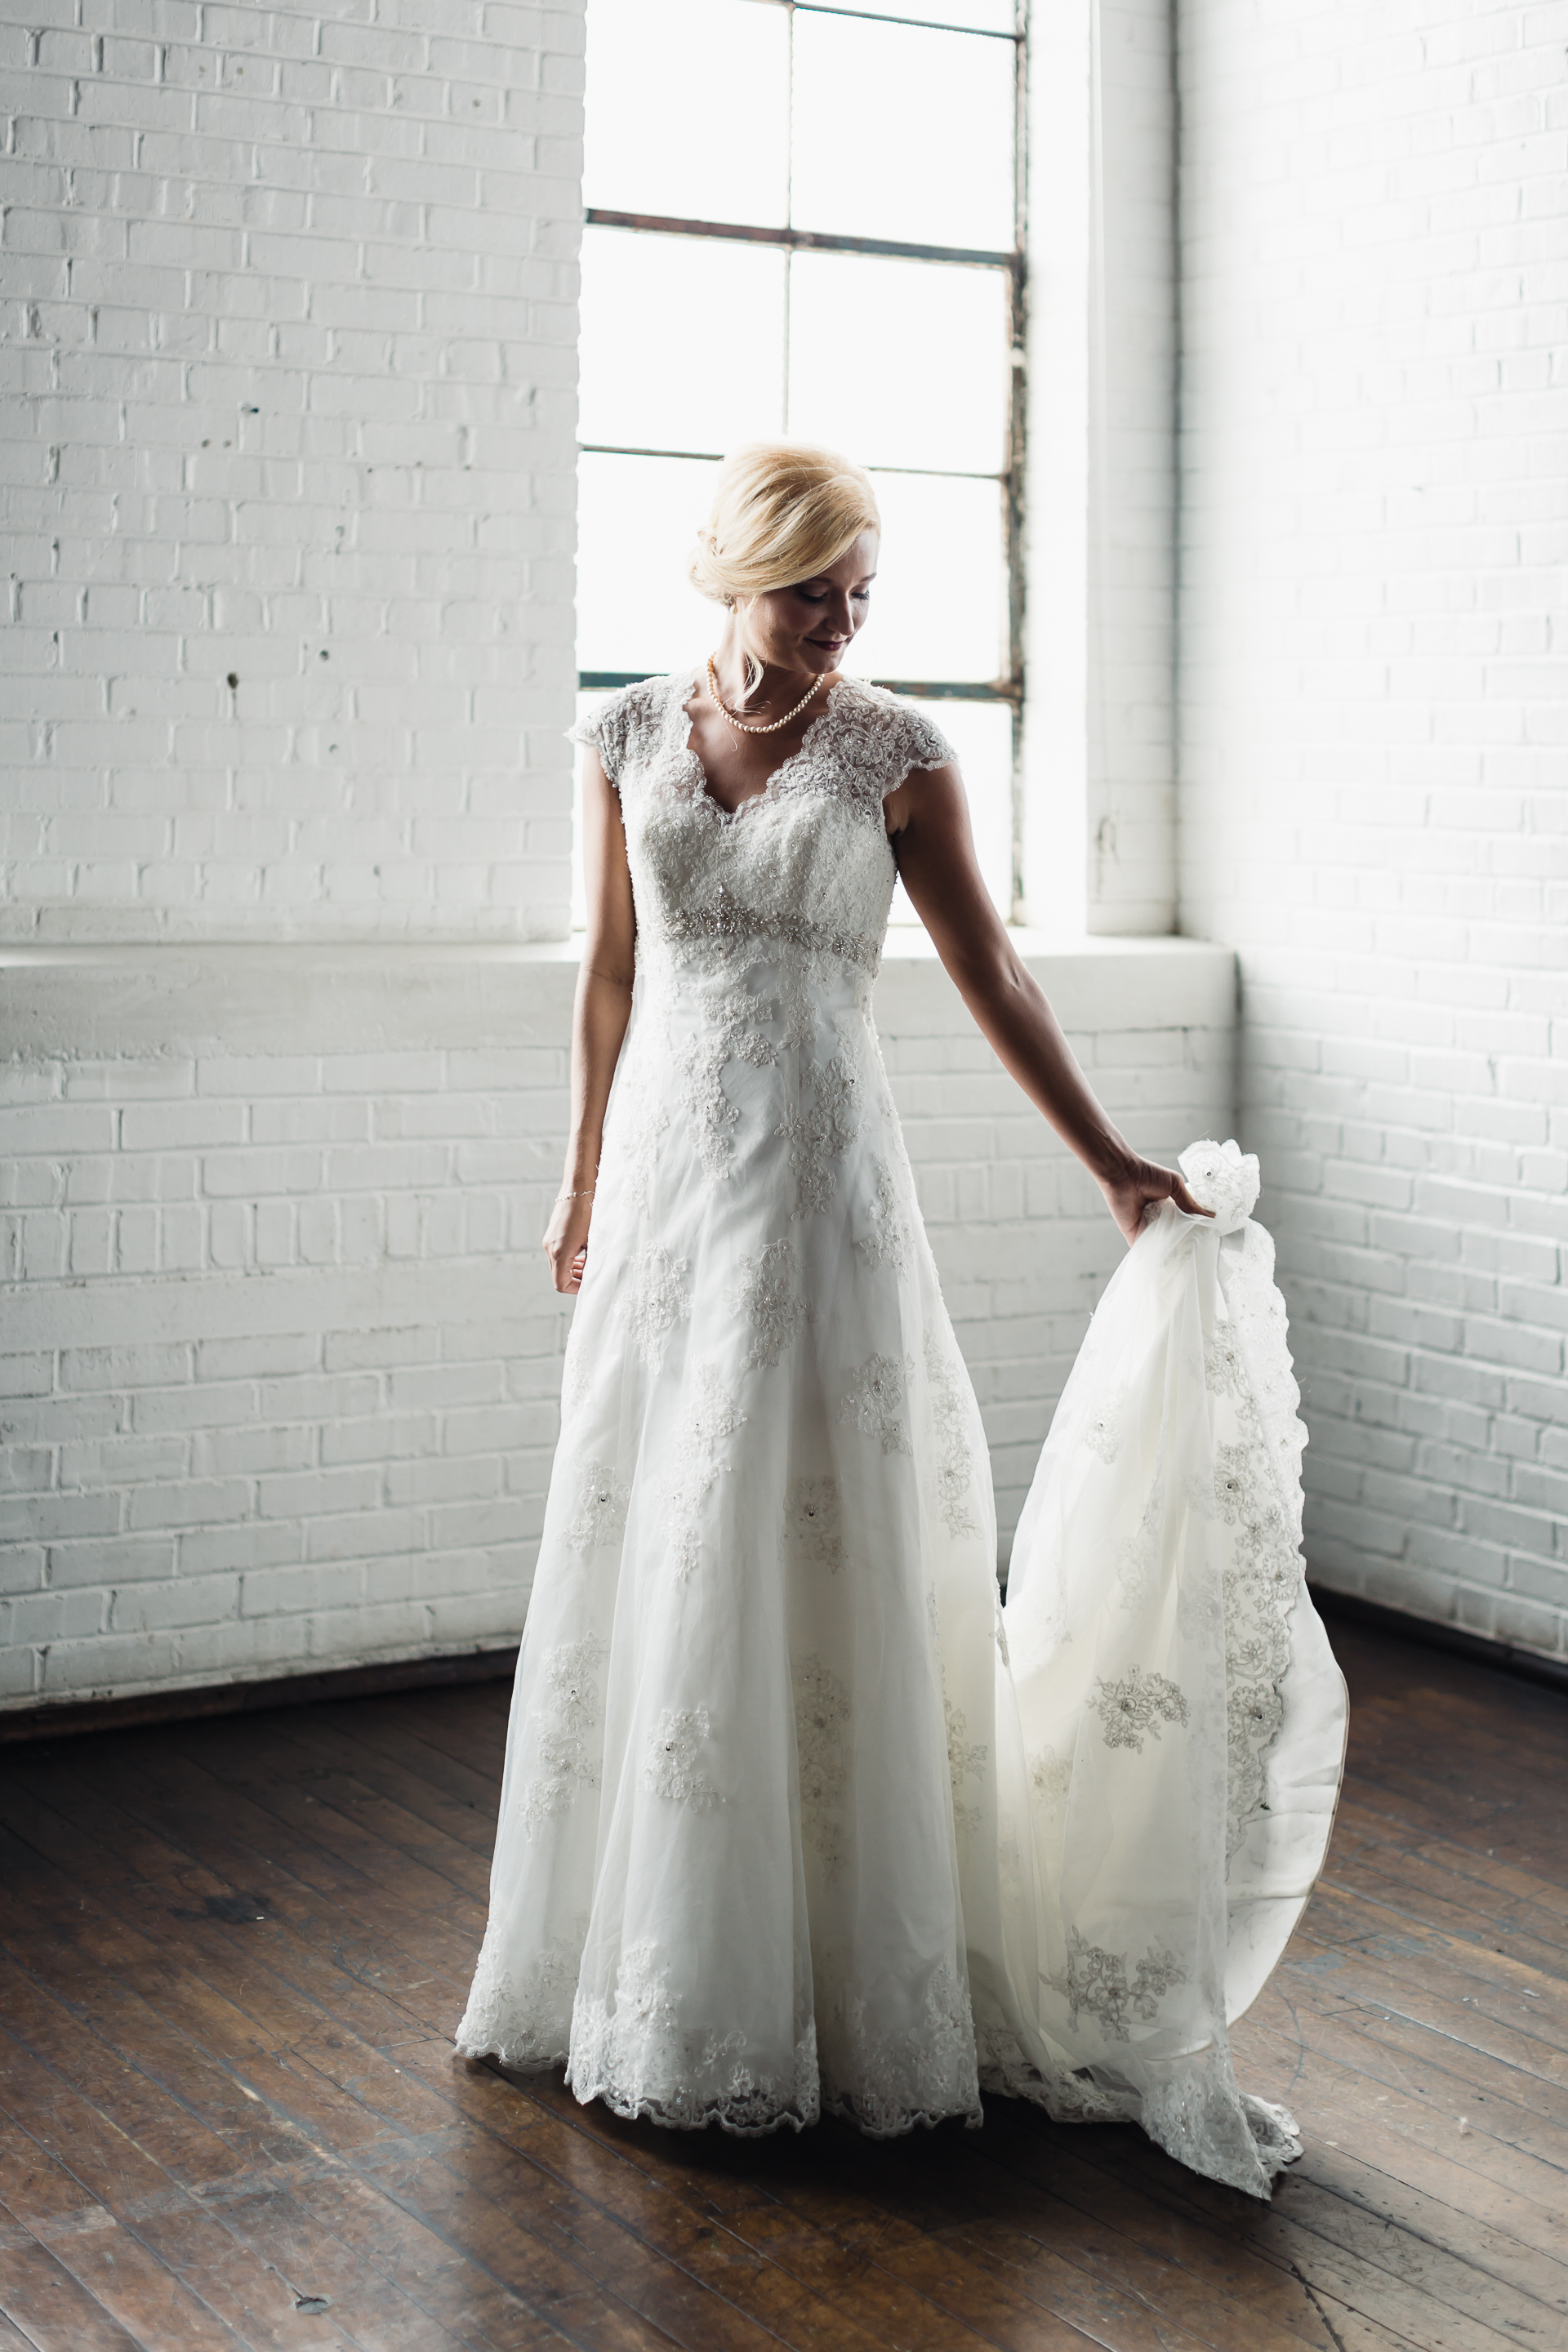 Gianna Keiko Atlanta NYC Brooklyn Hamptons Wedding Bridal Photographer-7.jpg